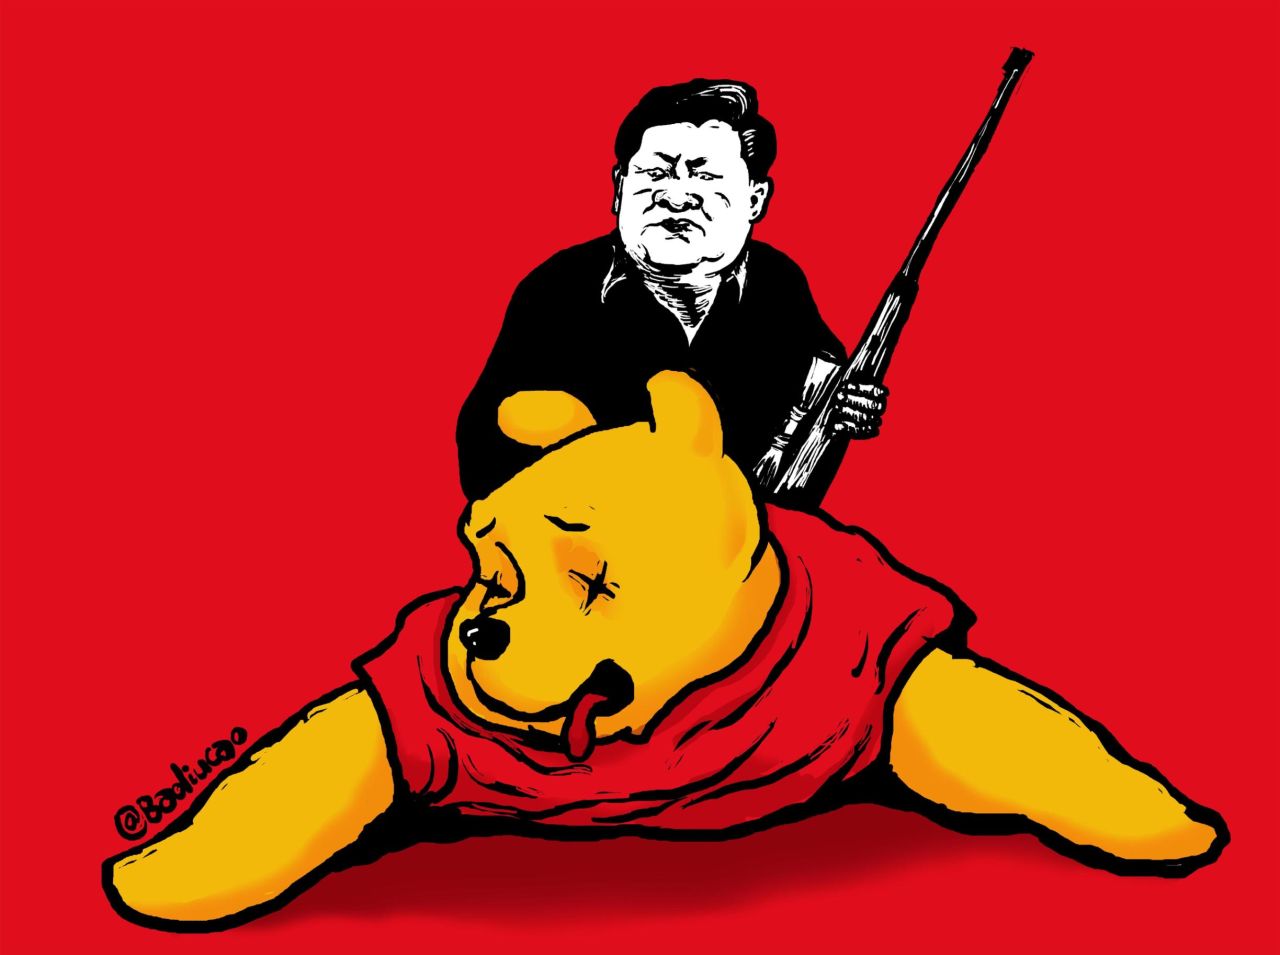 "Xi's going on a bear hunt" by Badiucao